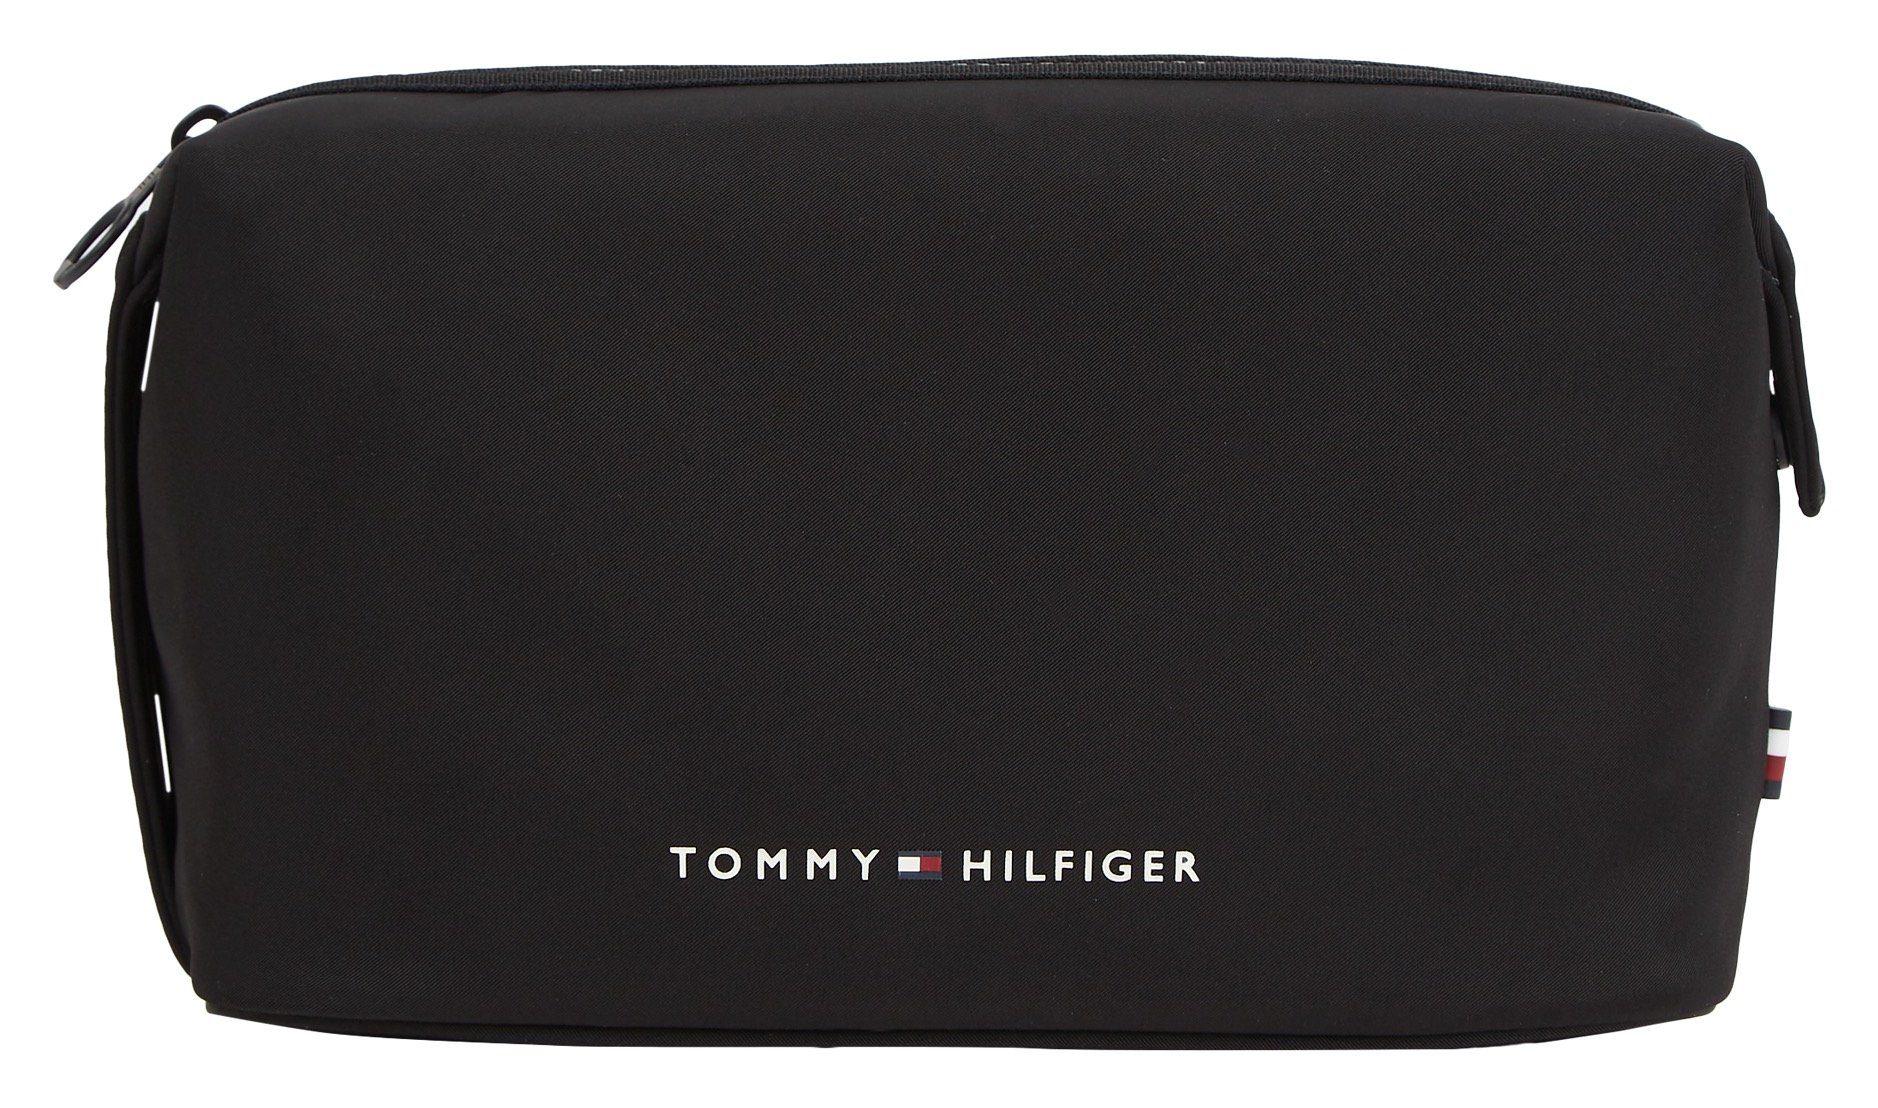 Tommy Hilfiger Make-uptasje TH SKYLINE WASHBAG in een eenvoudige look